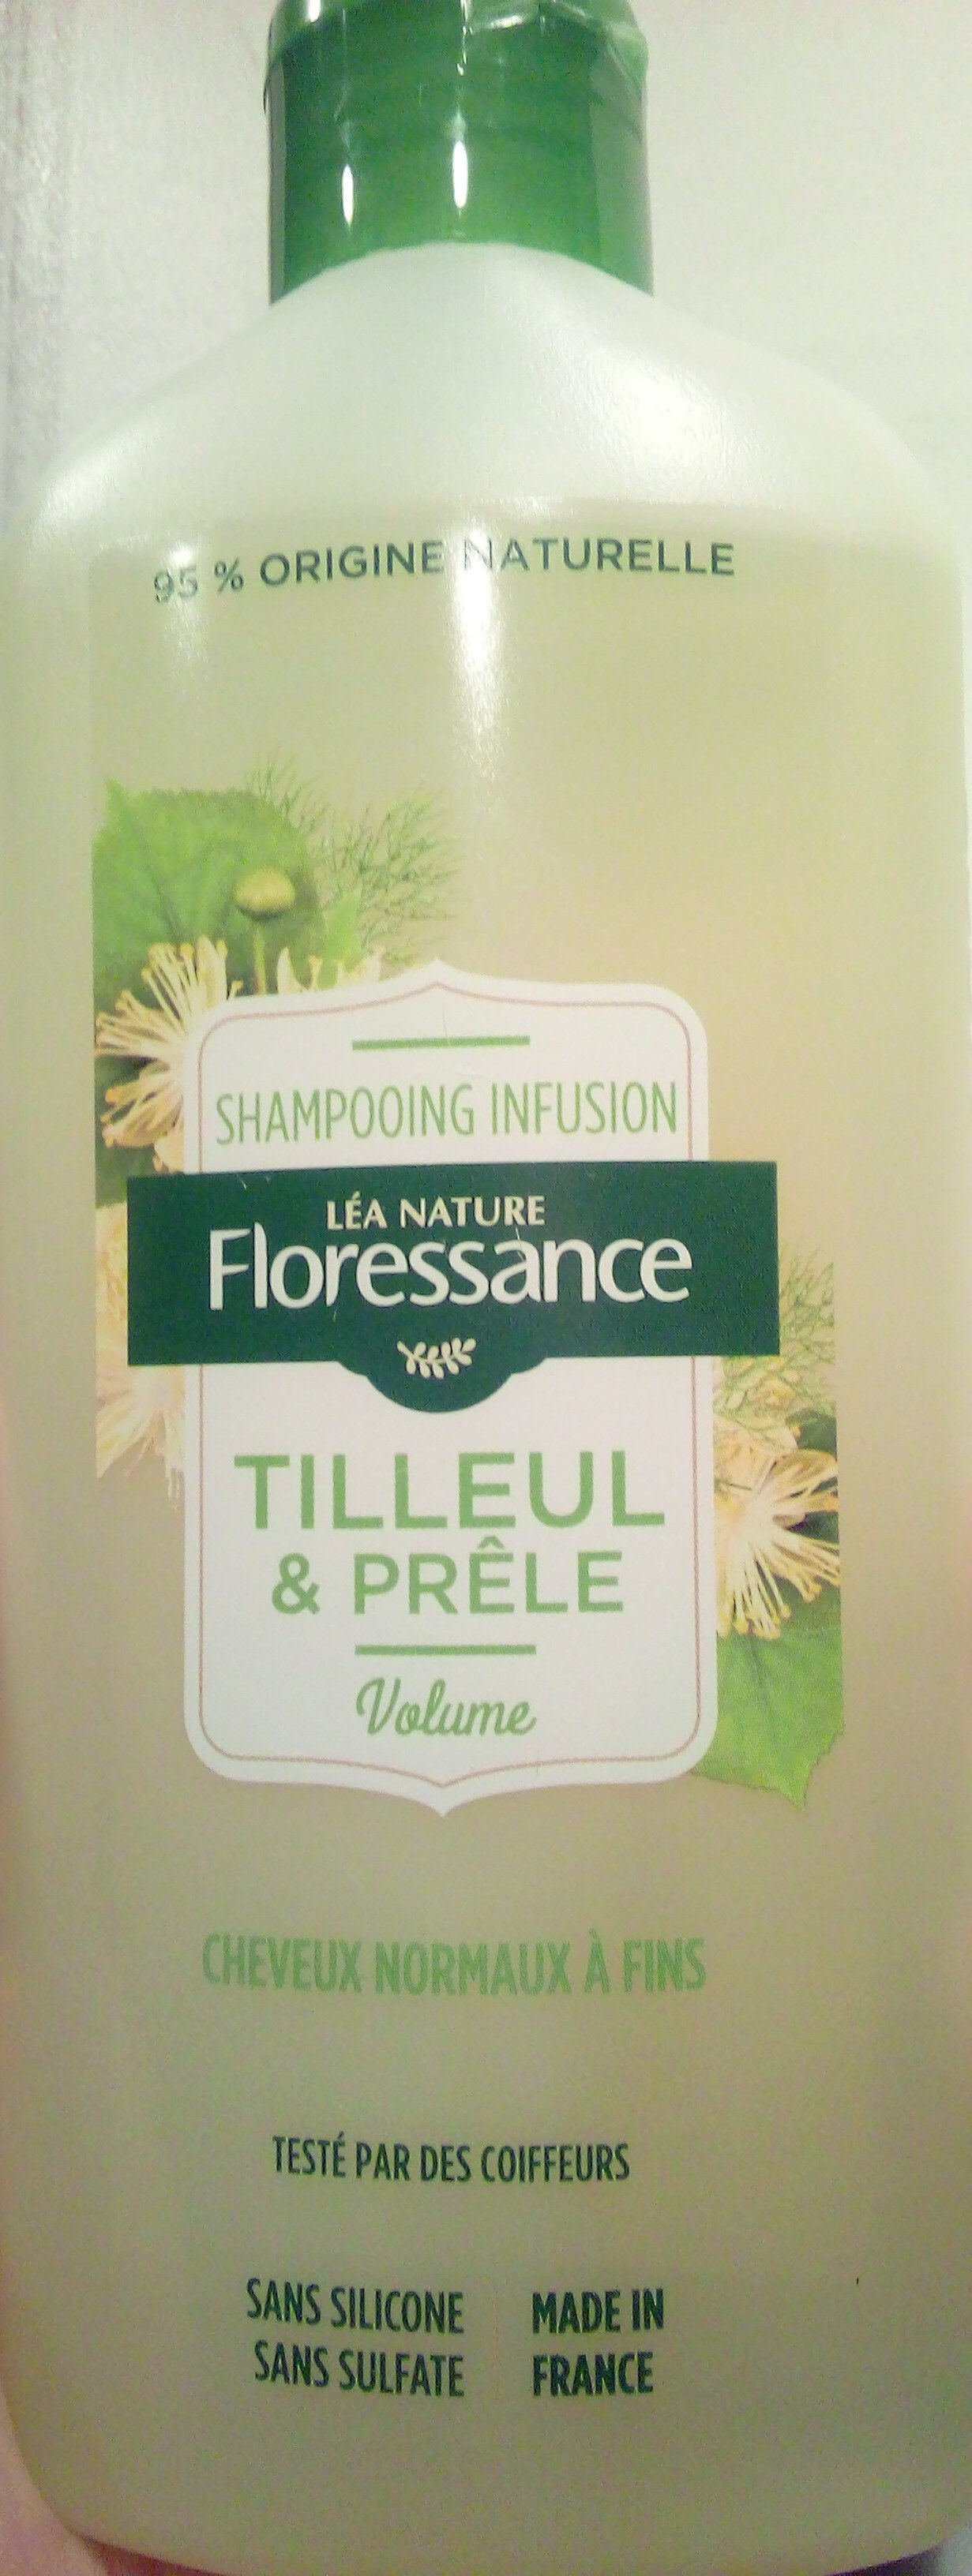 Shampooing infusion tilleul & prêle - Produit - fr